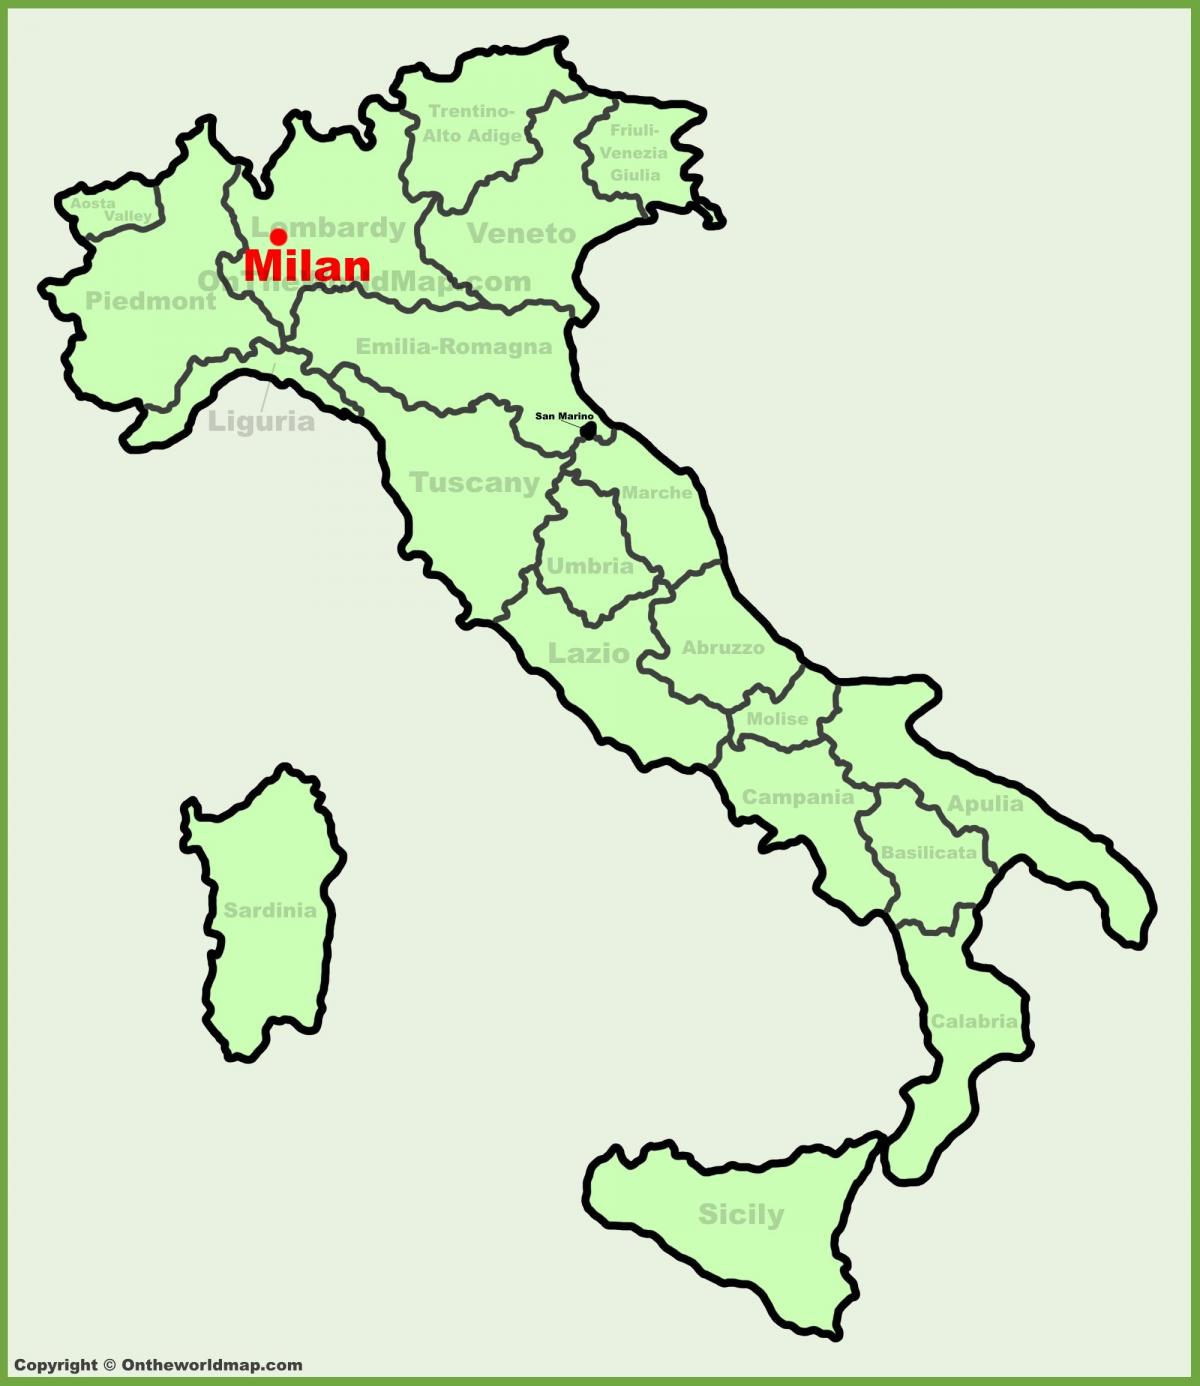 peta dari italia menunjukkan milan